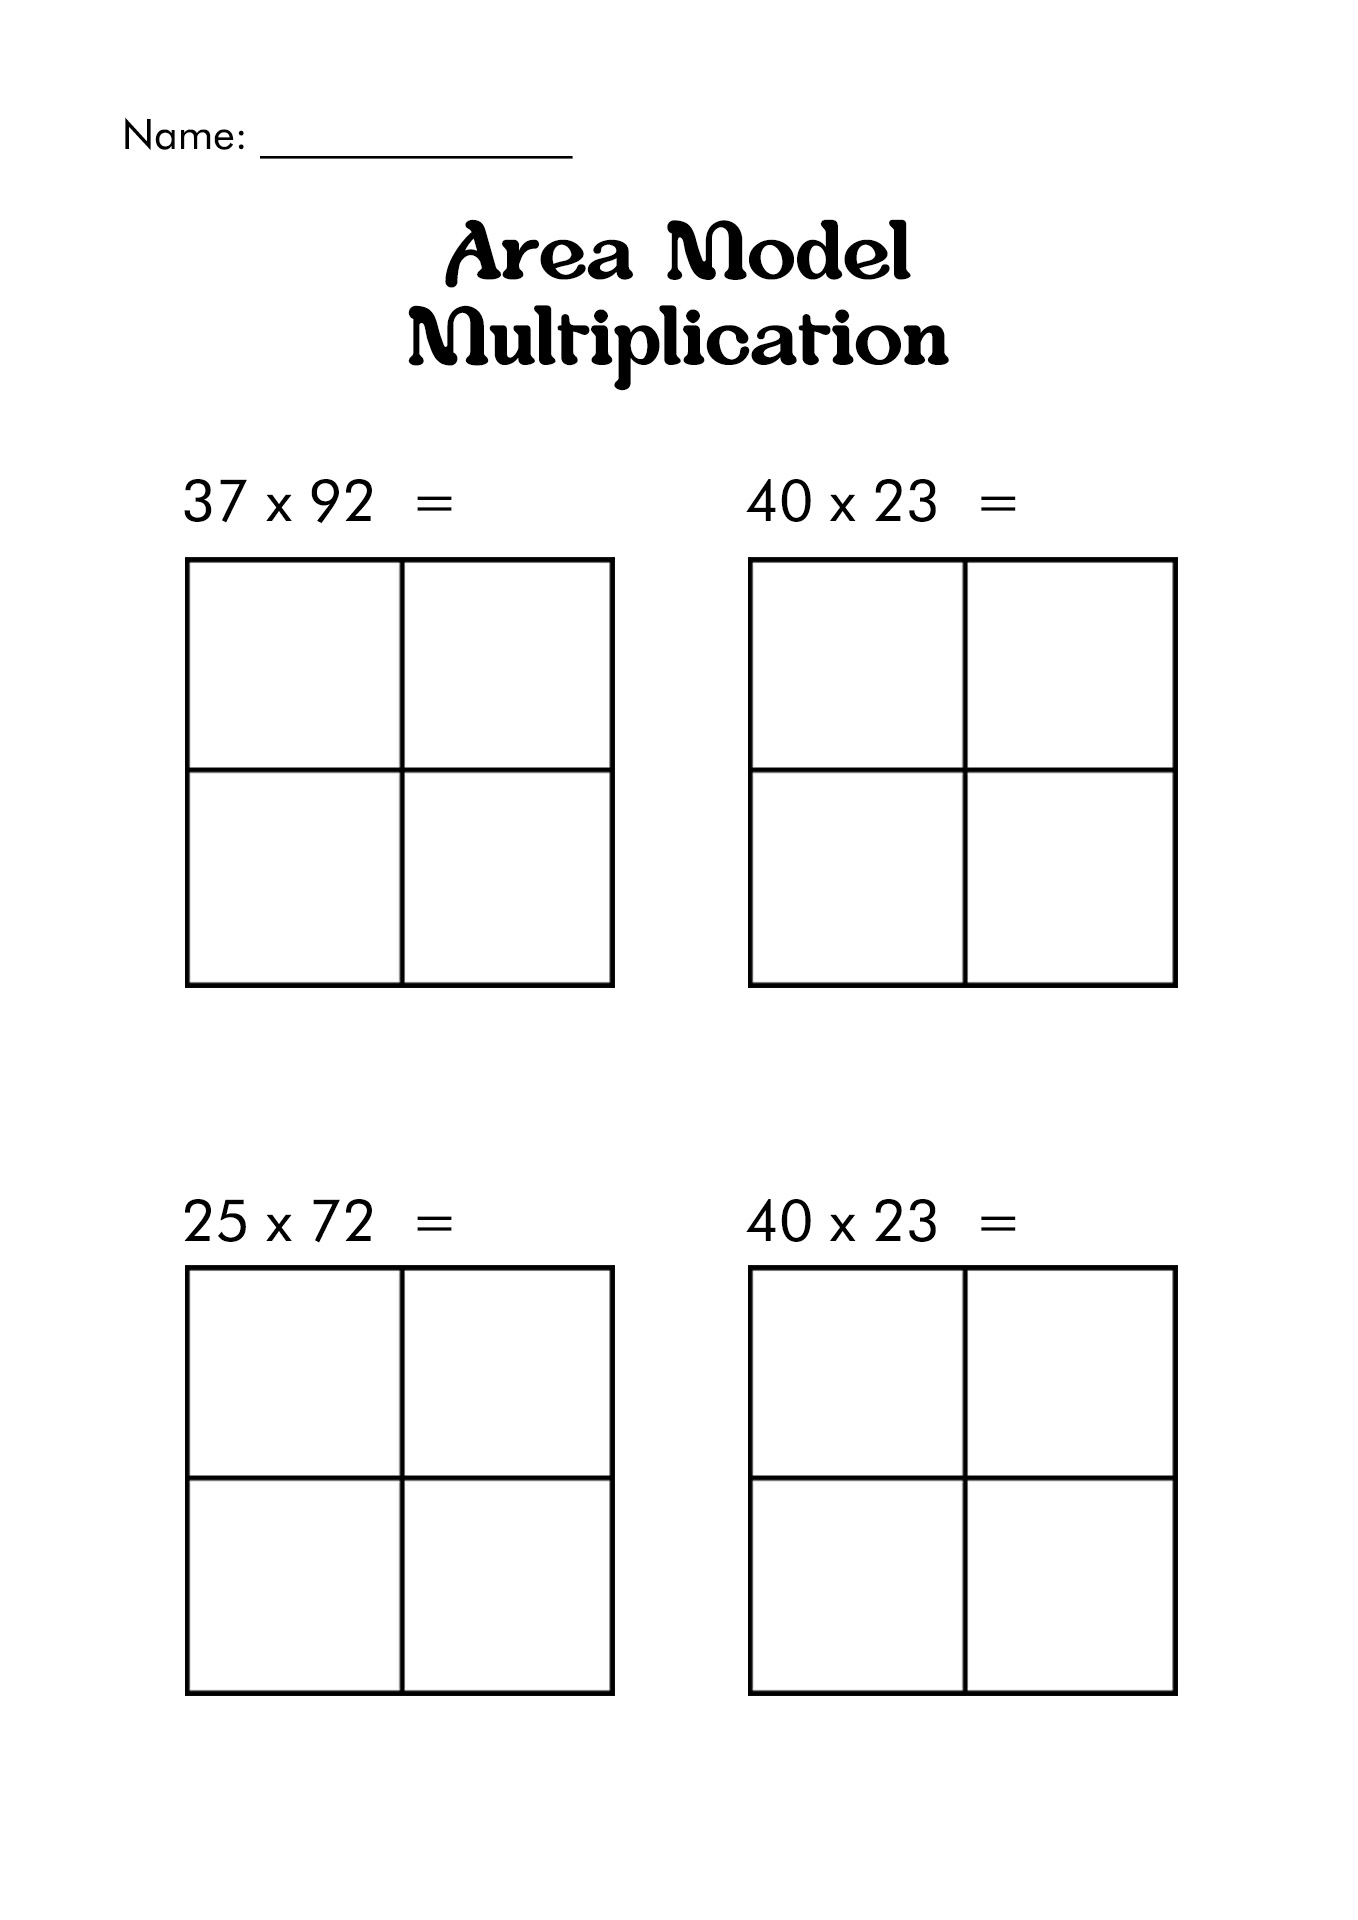 Area Model Multiplication Decimals Multiplying Decimals Using An Area Model In 2020 You